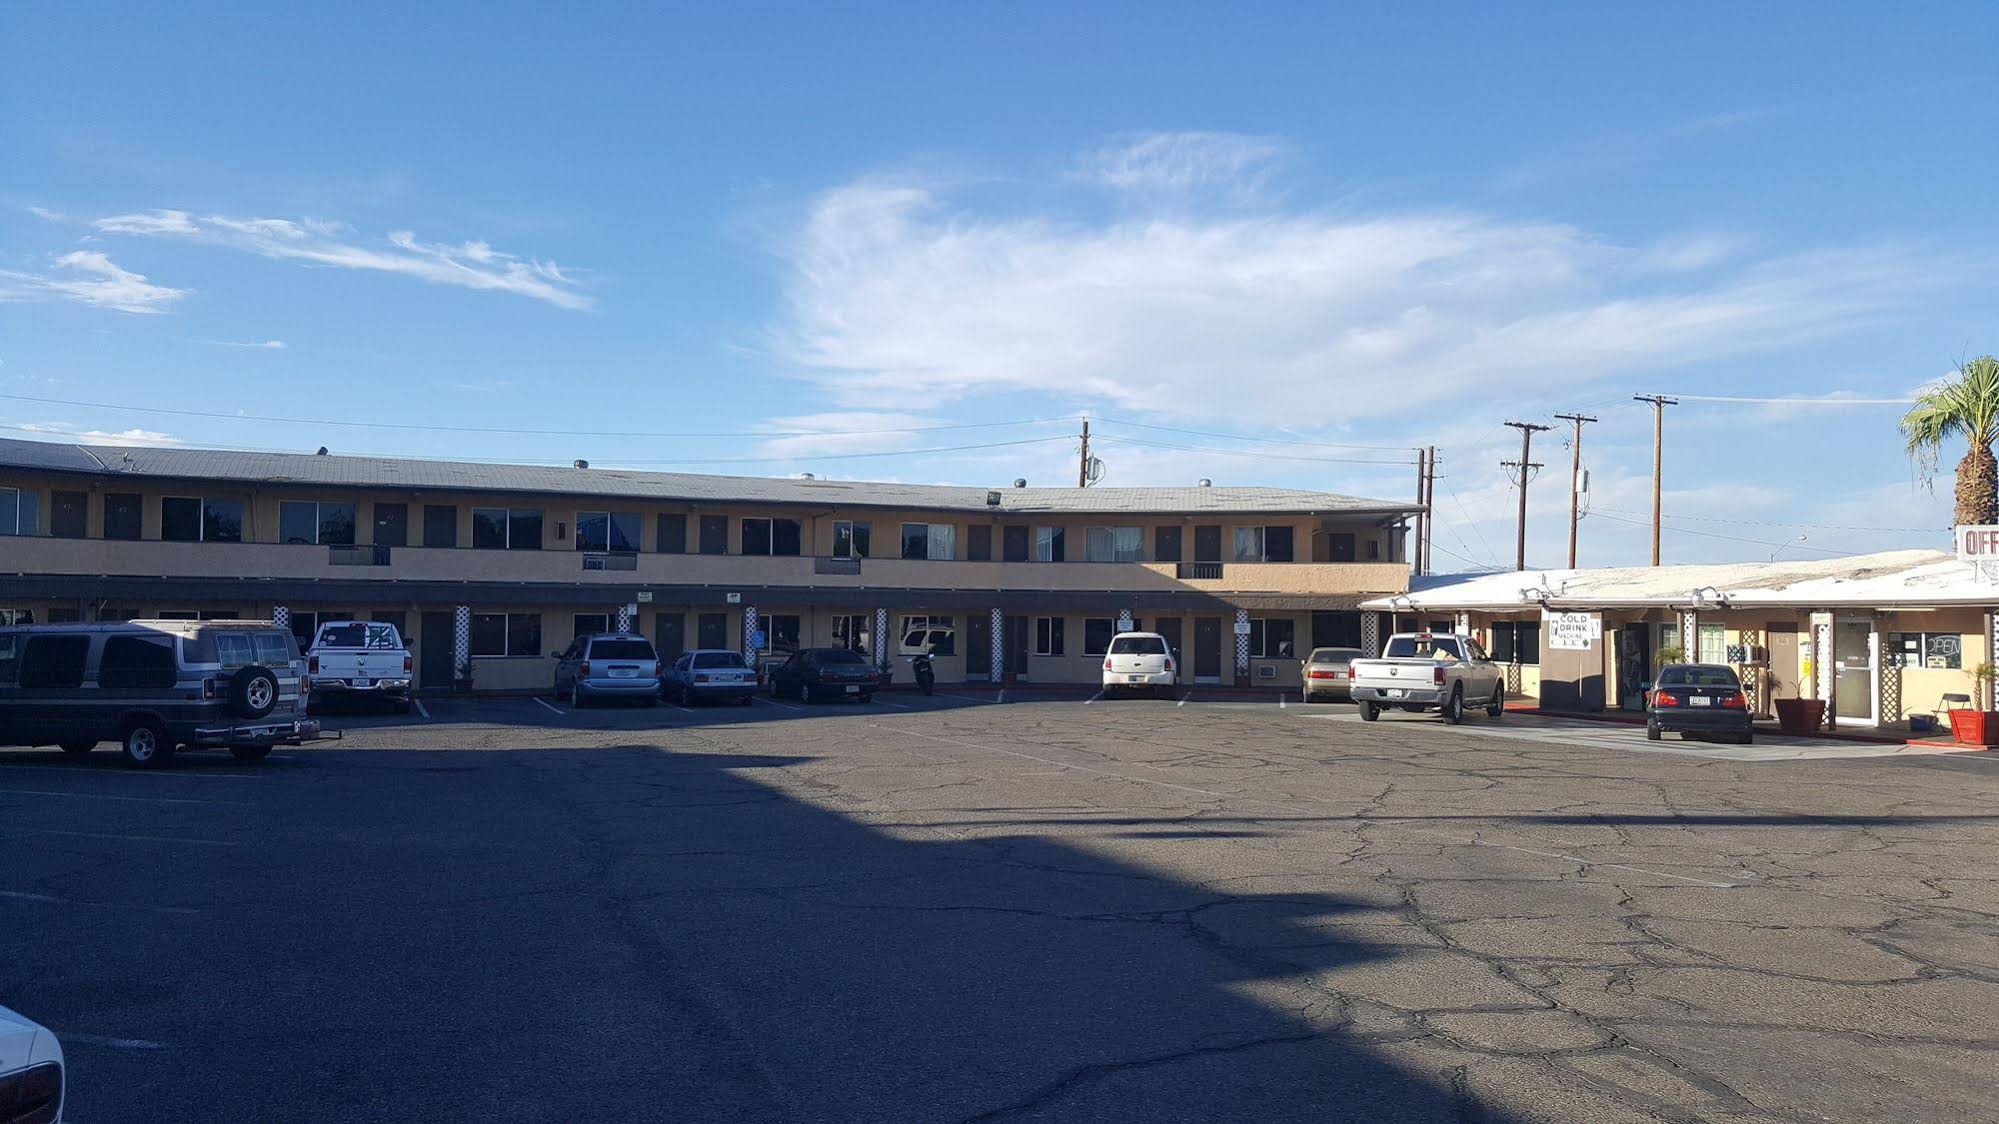 Best Motel